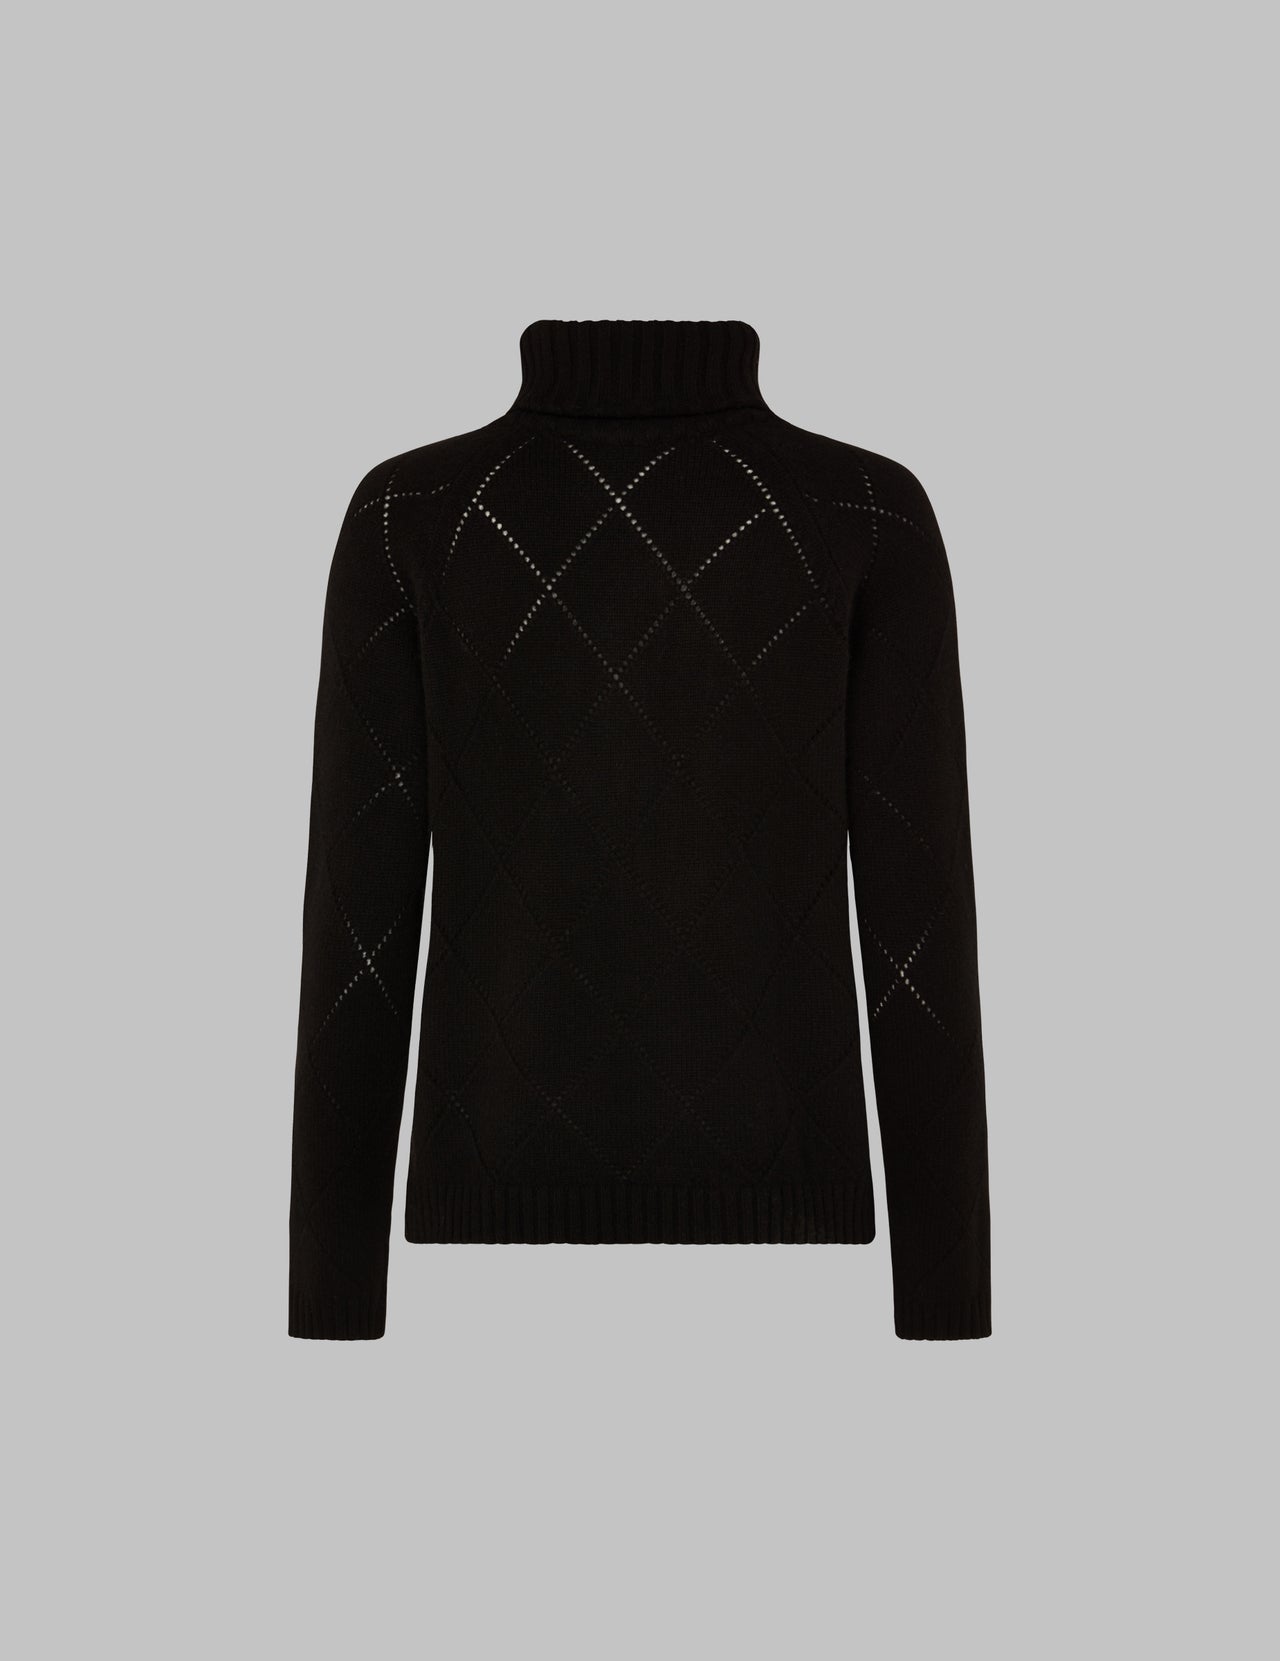  Black Cashmere Roll Neck Argyle Sweater 